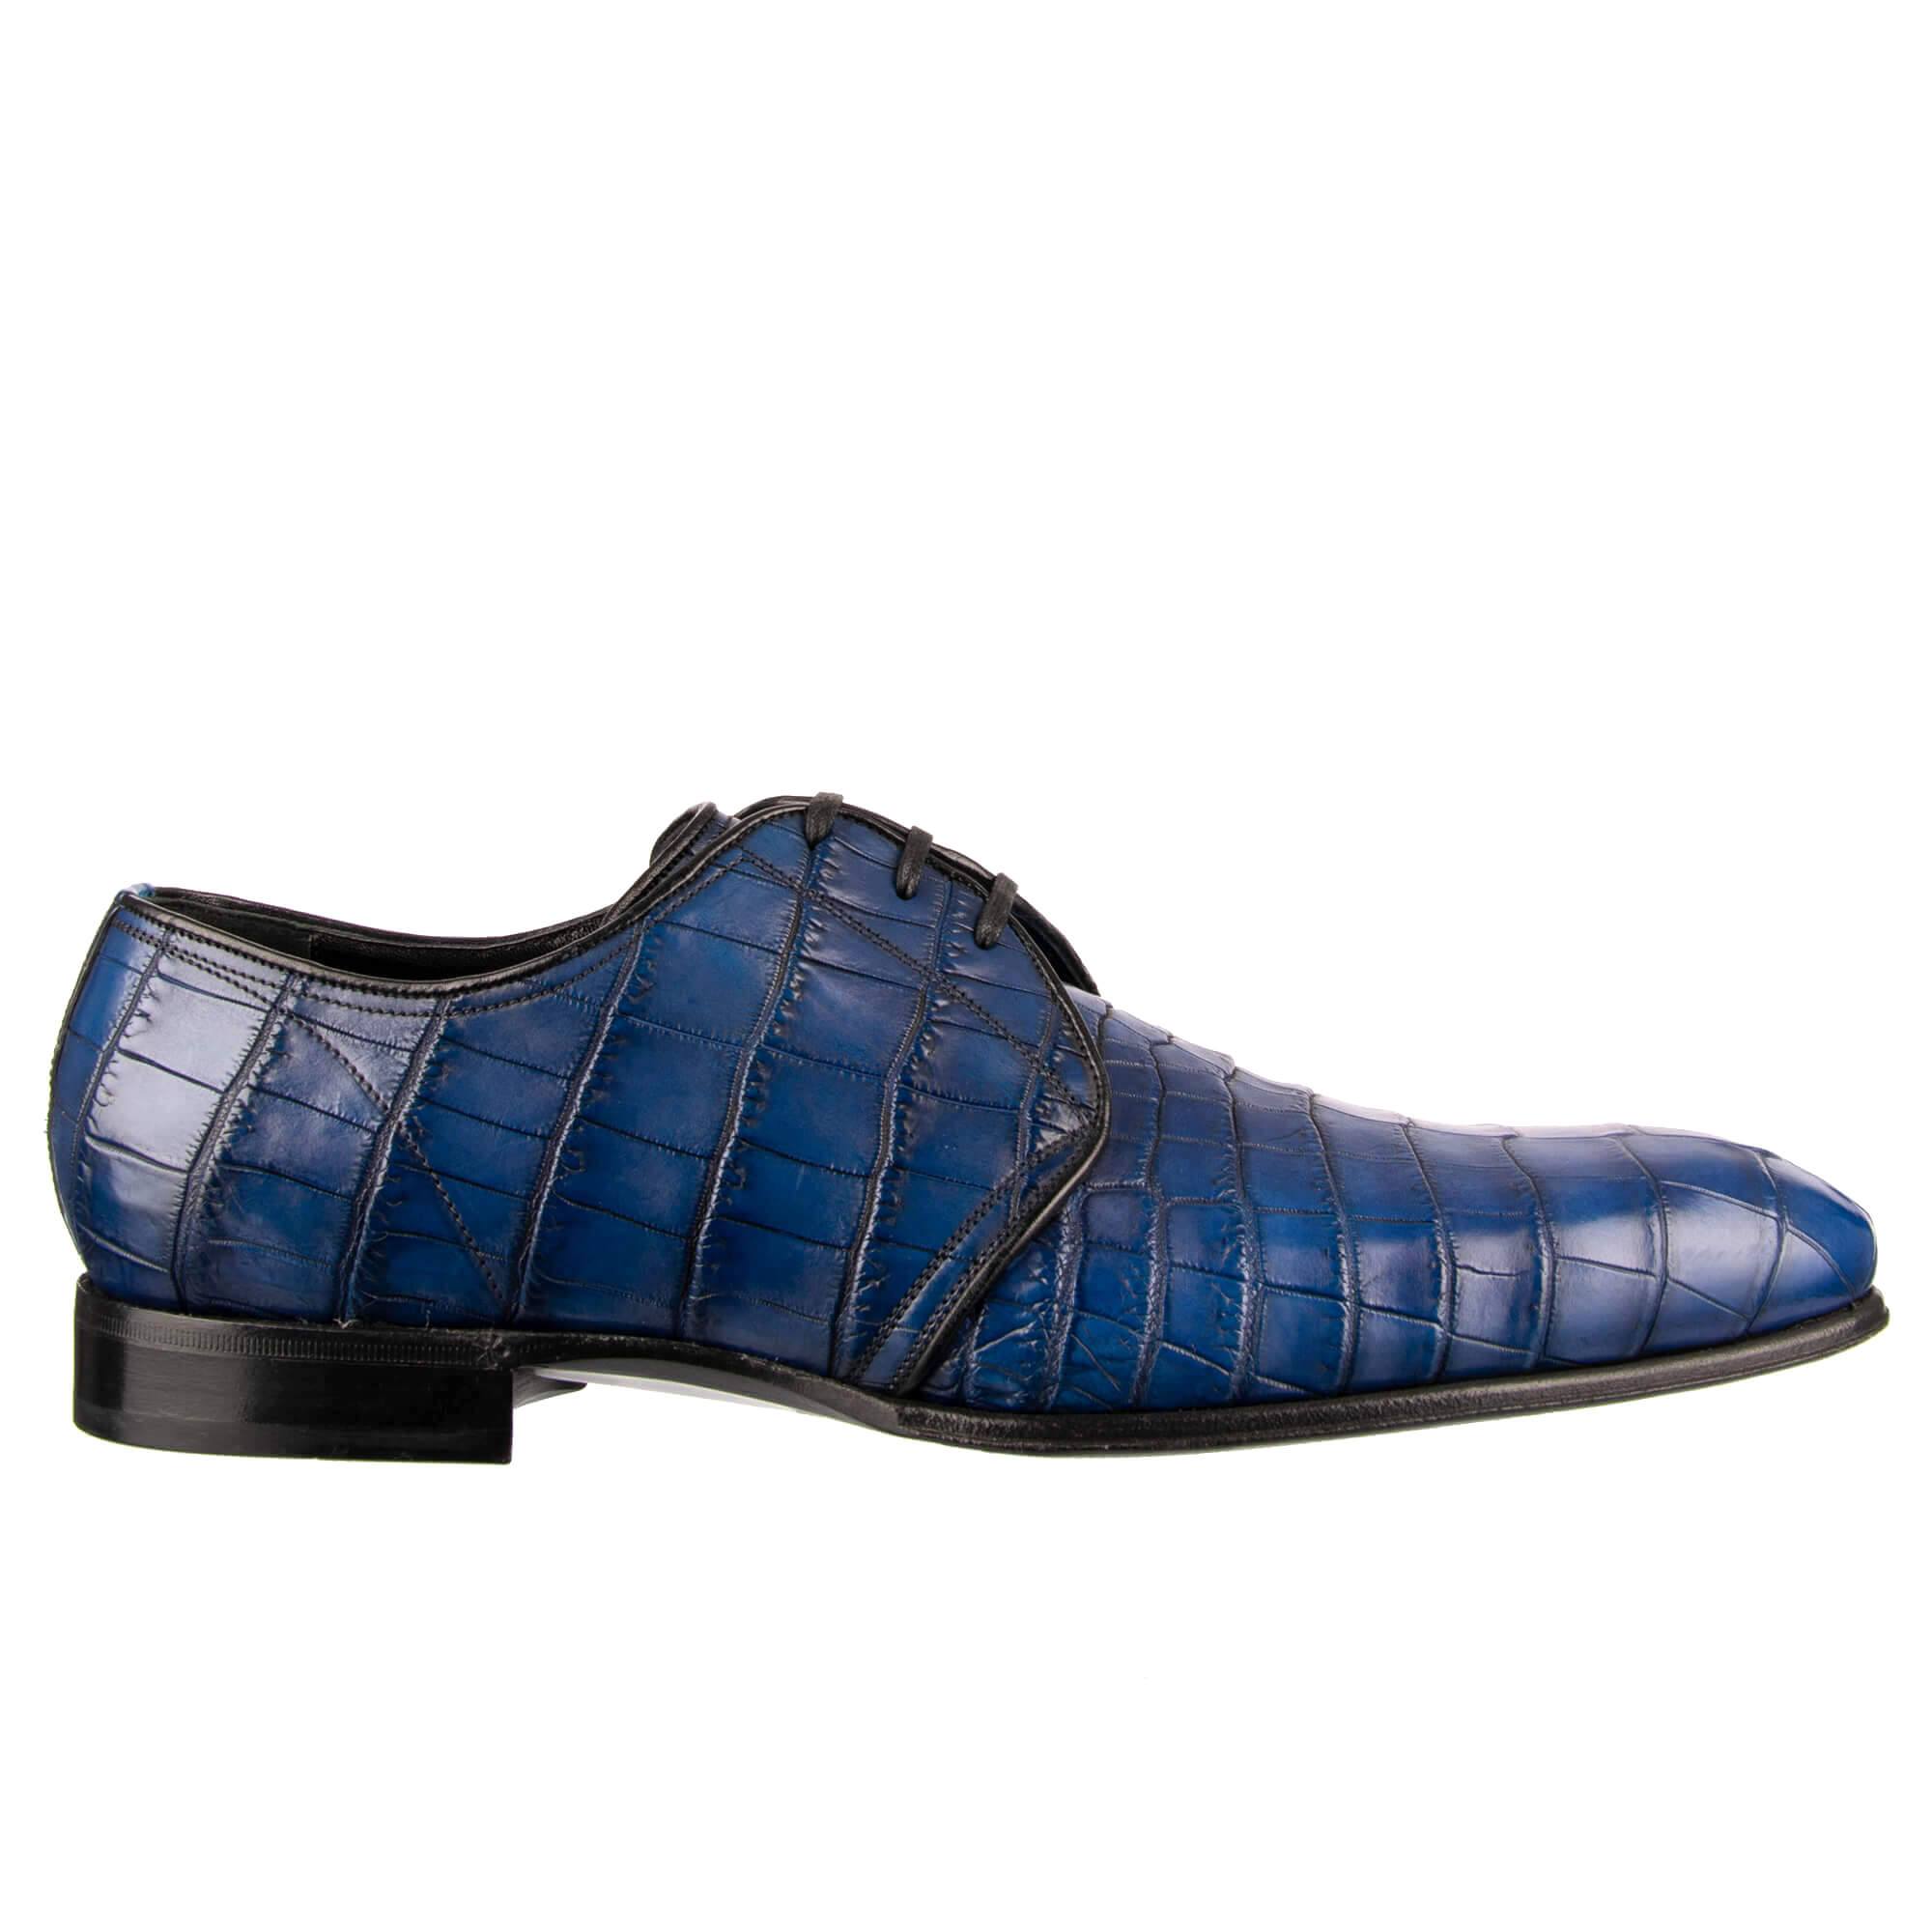 dolce gabbana shoes blue